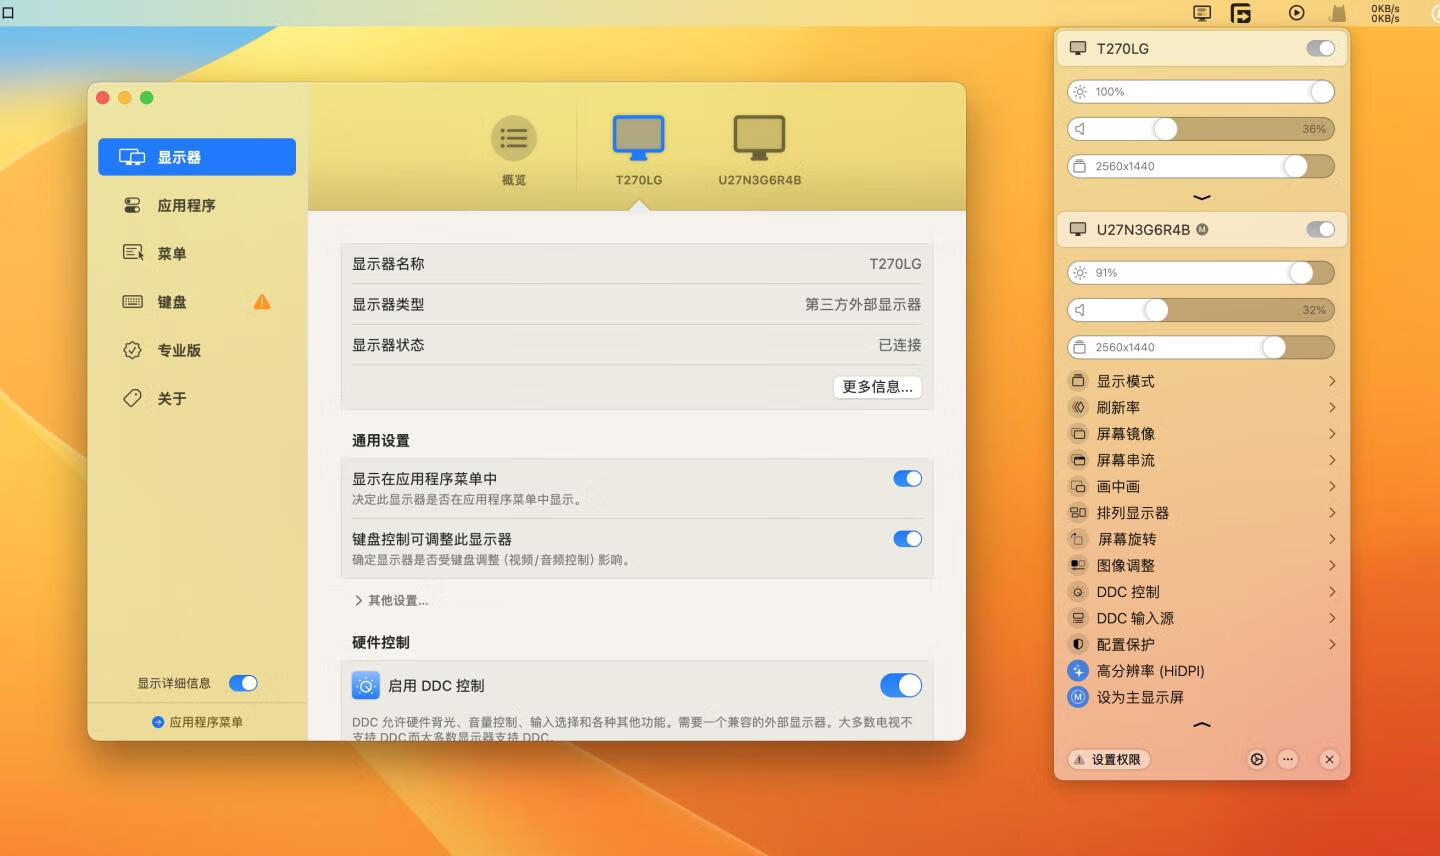 BetterDisplay Pro Mac v2.0.11激活版 显示器管理工具 可以 快速开启HIDPI